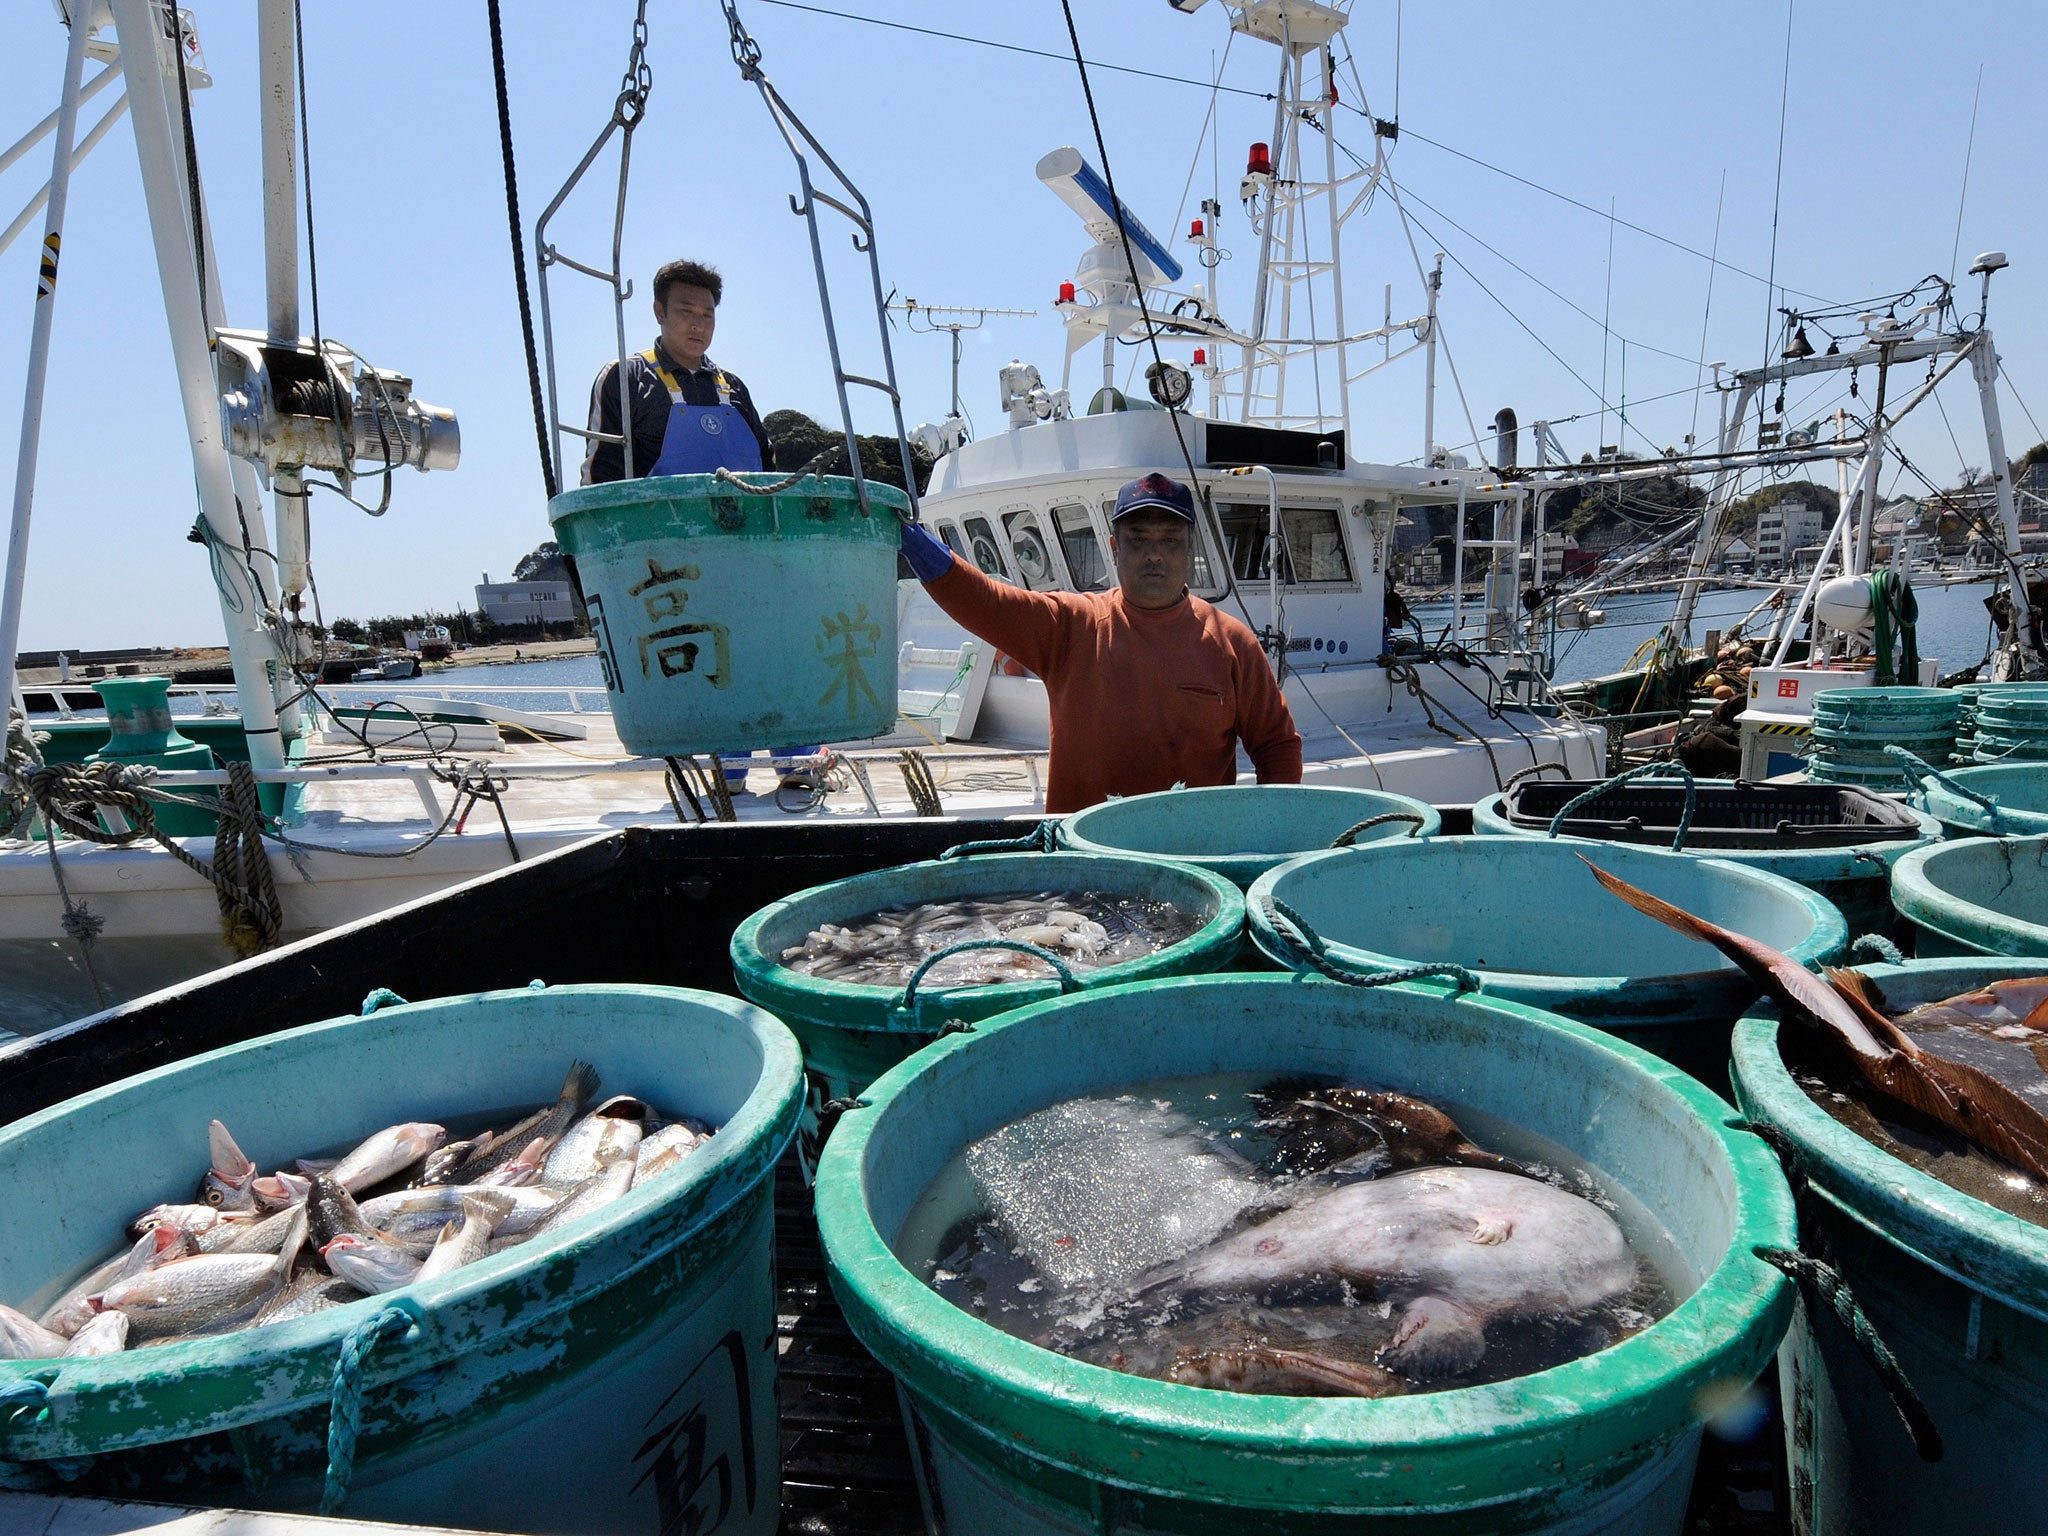 Fishermen unloading their catch at the Hirakata fish market in Kitaibaraki, Ibaraki prefecture, south of the Fukushima daiichi nuclear power plant number 1